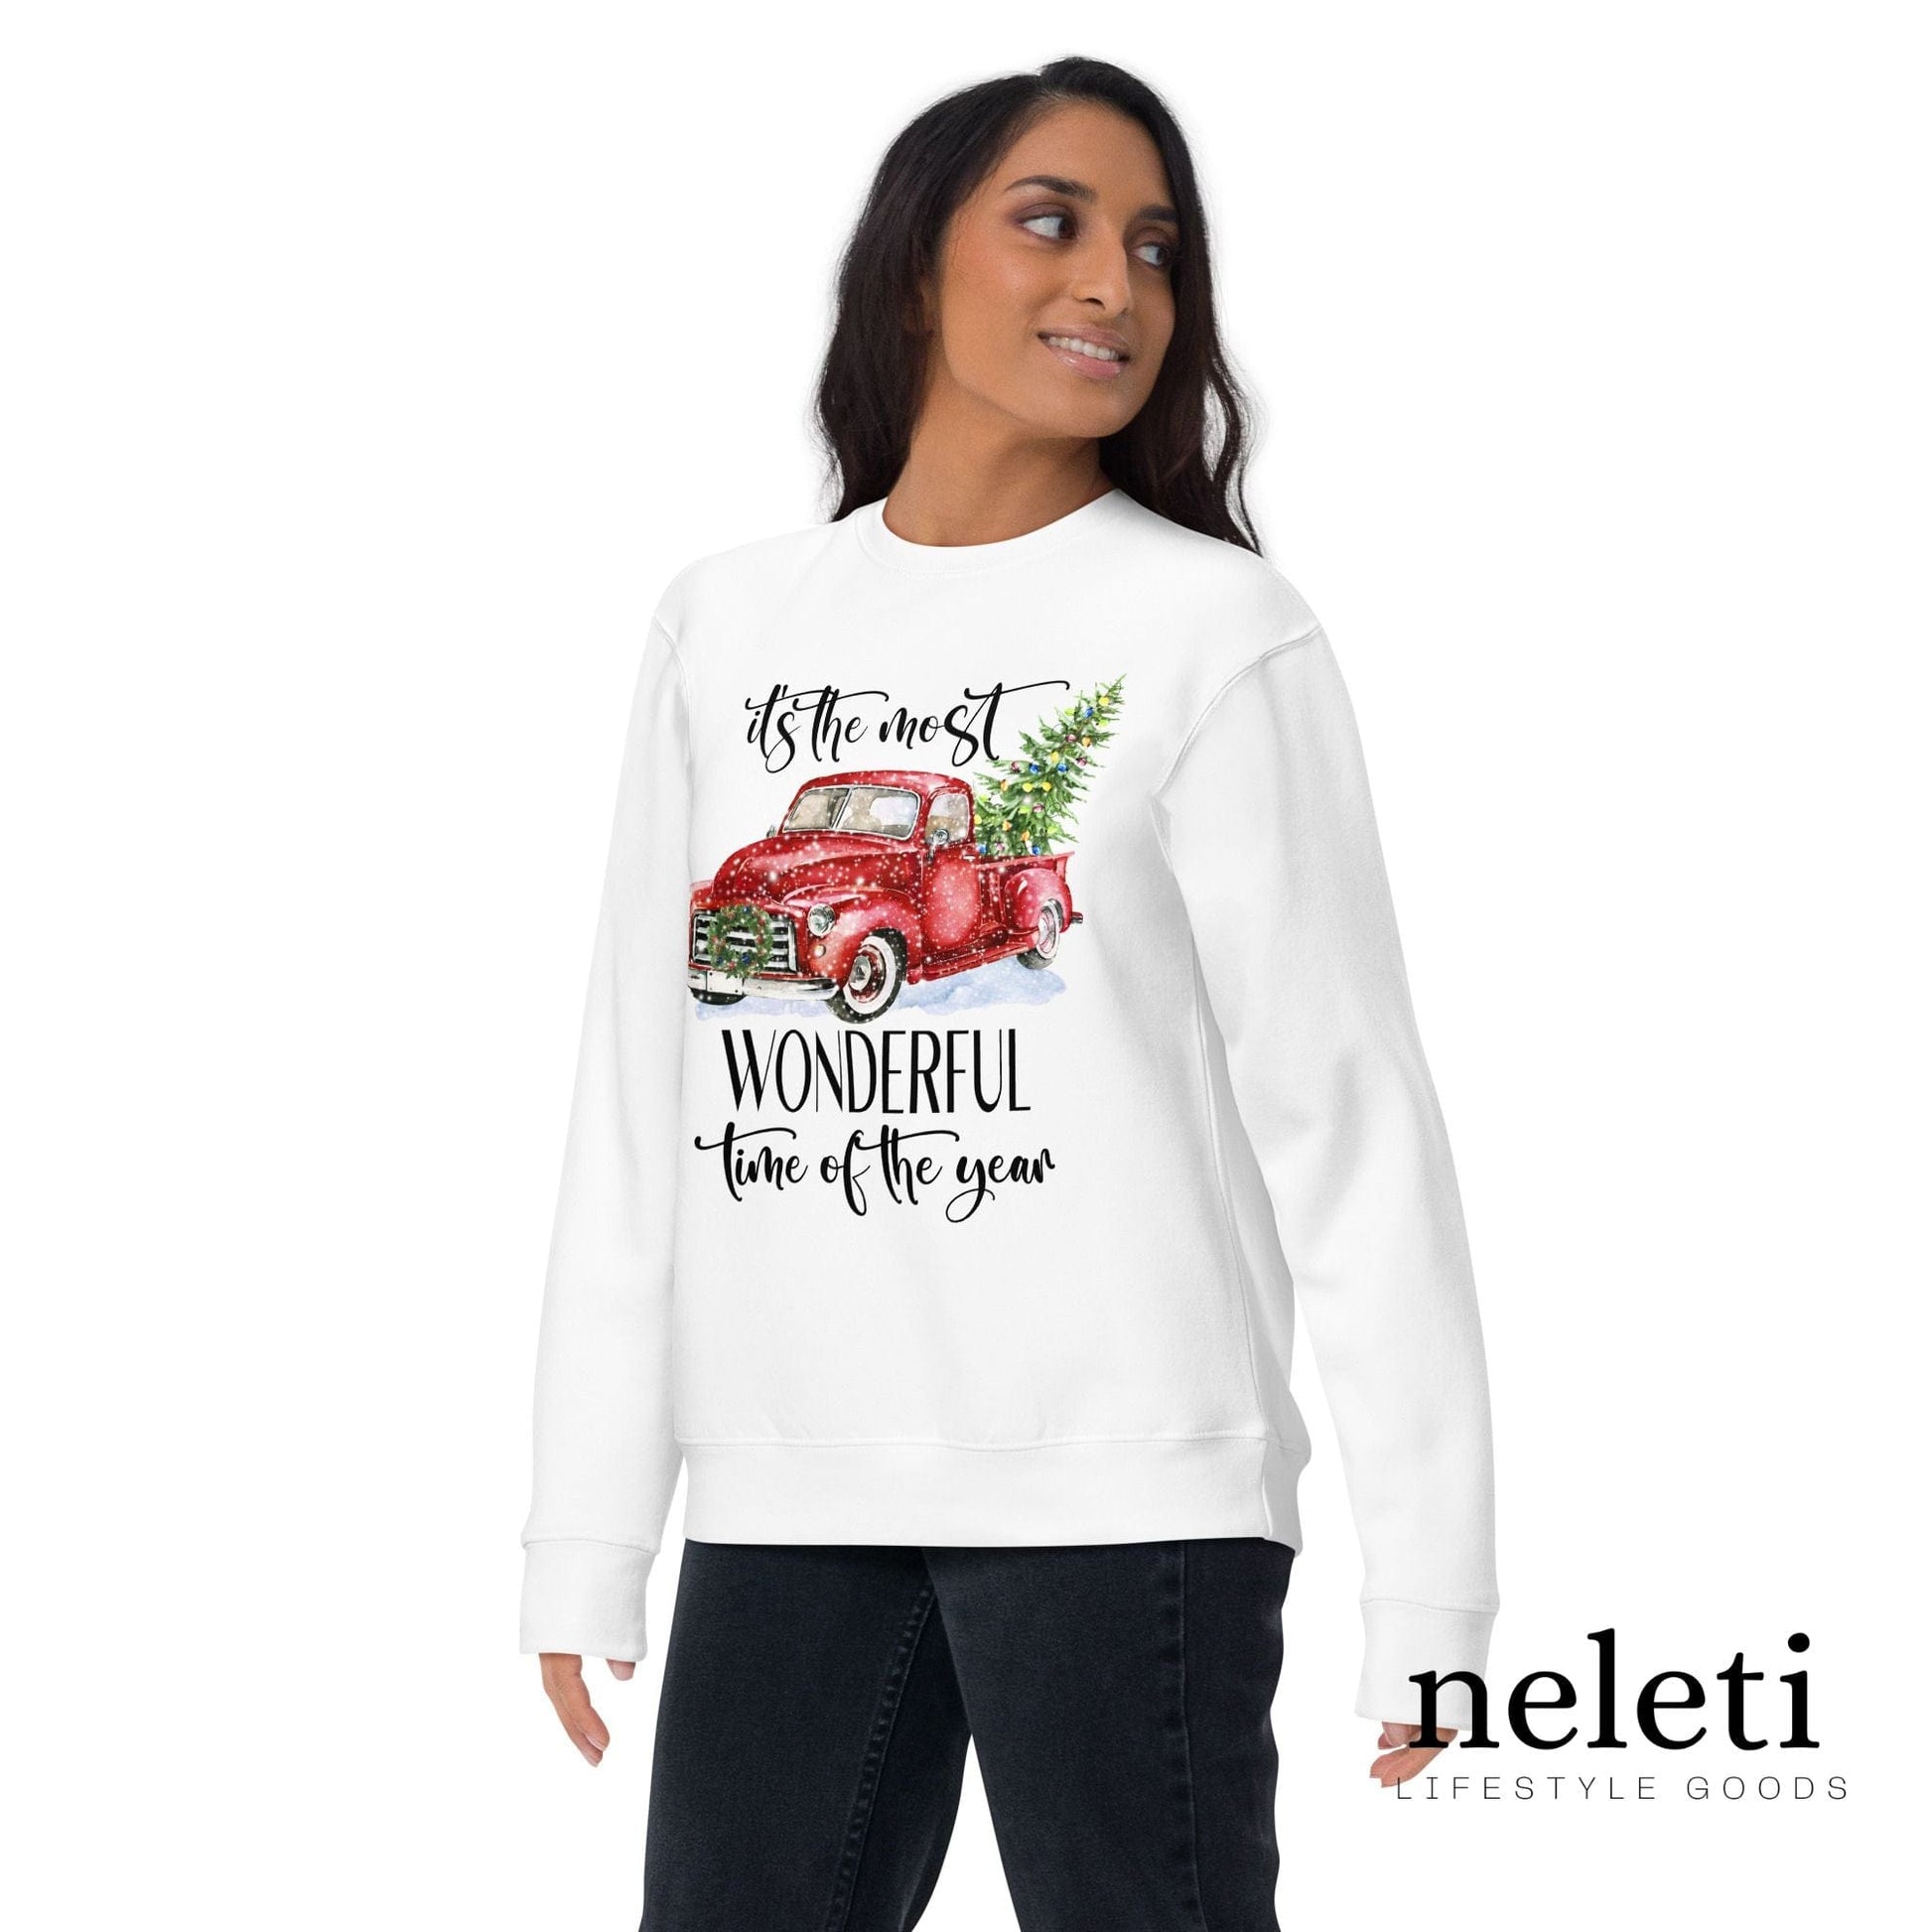 neleti.com-christmas-sweatshirt